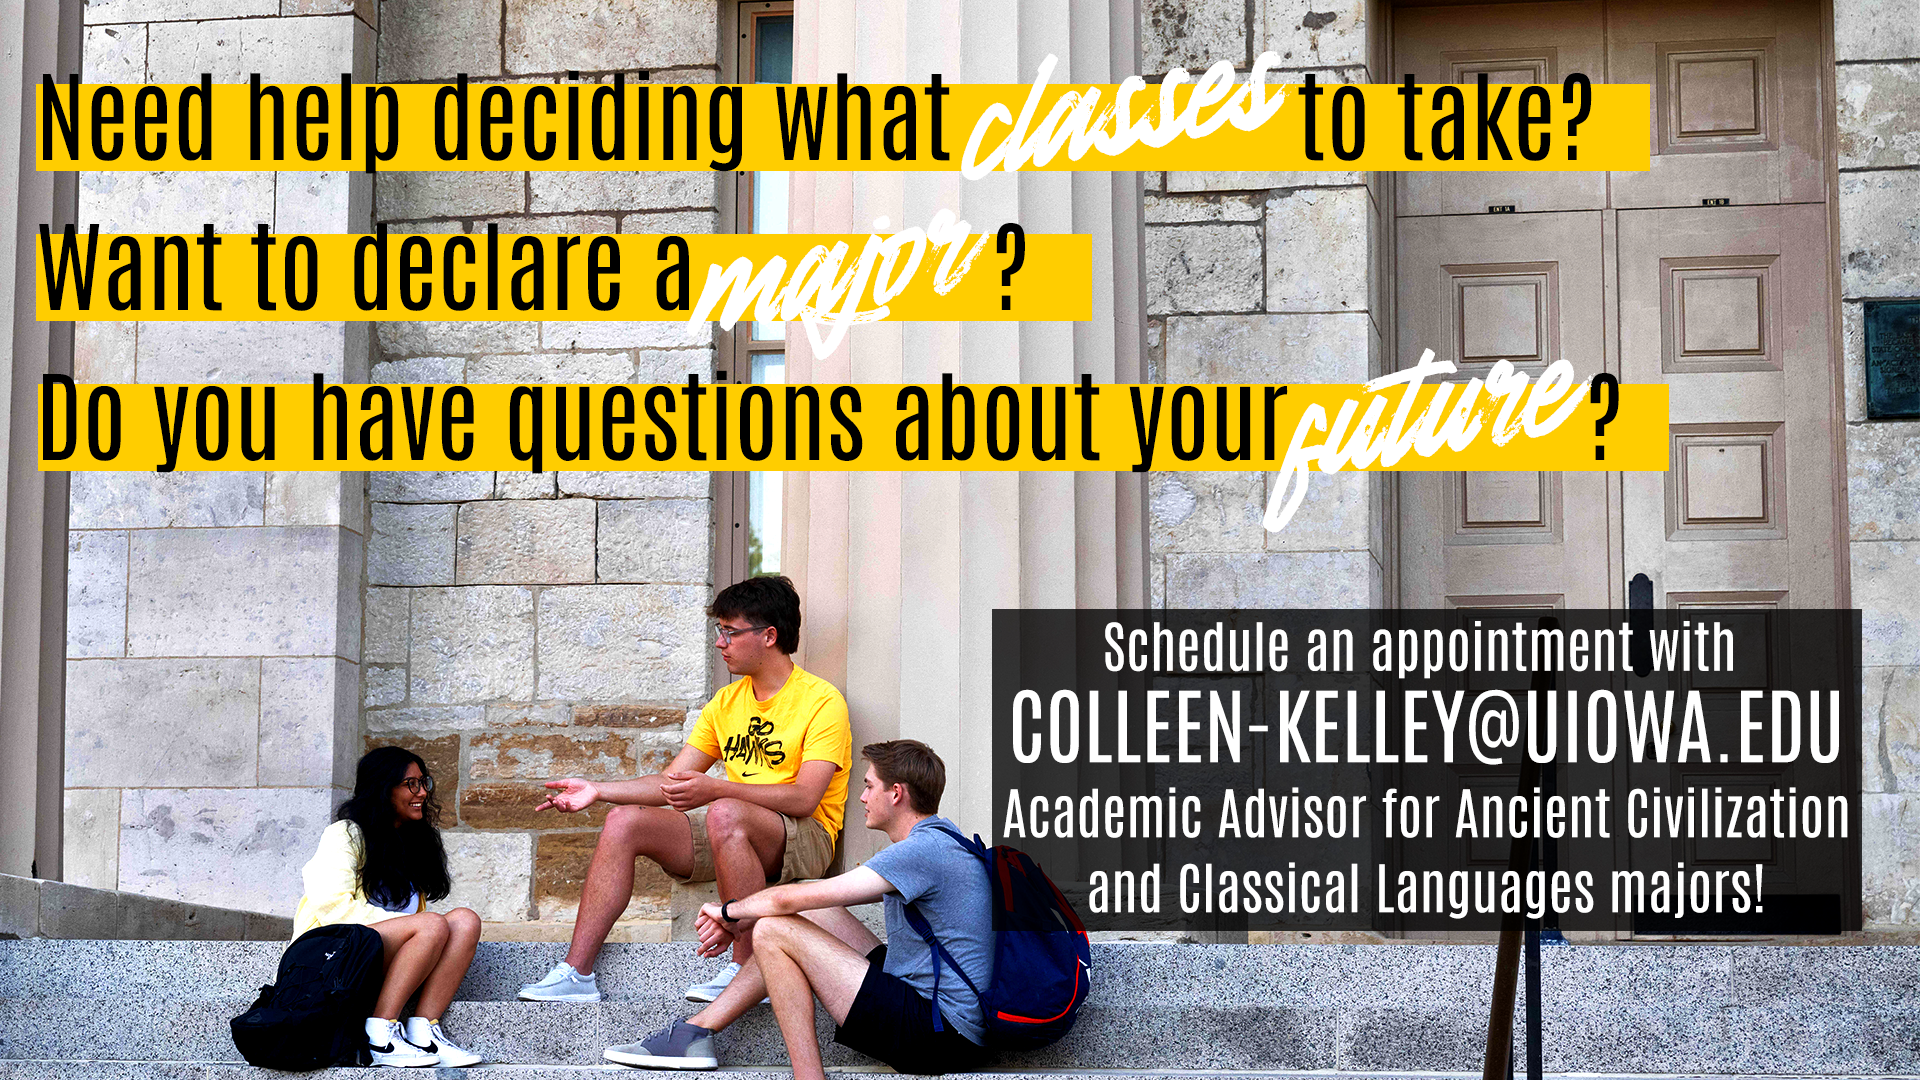 Academic advisor is colleen-kelley@uiowa.edu